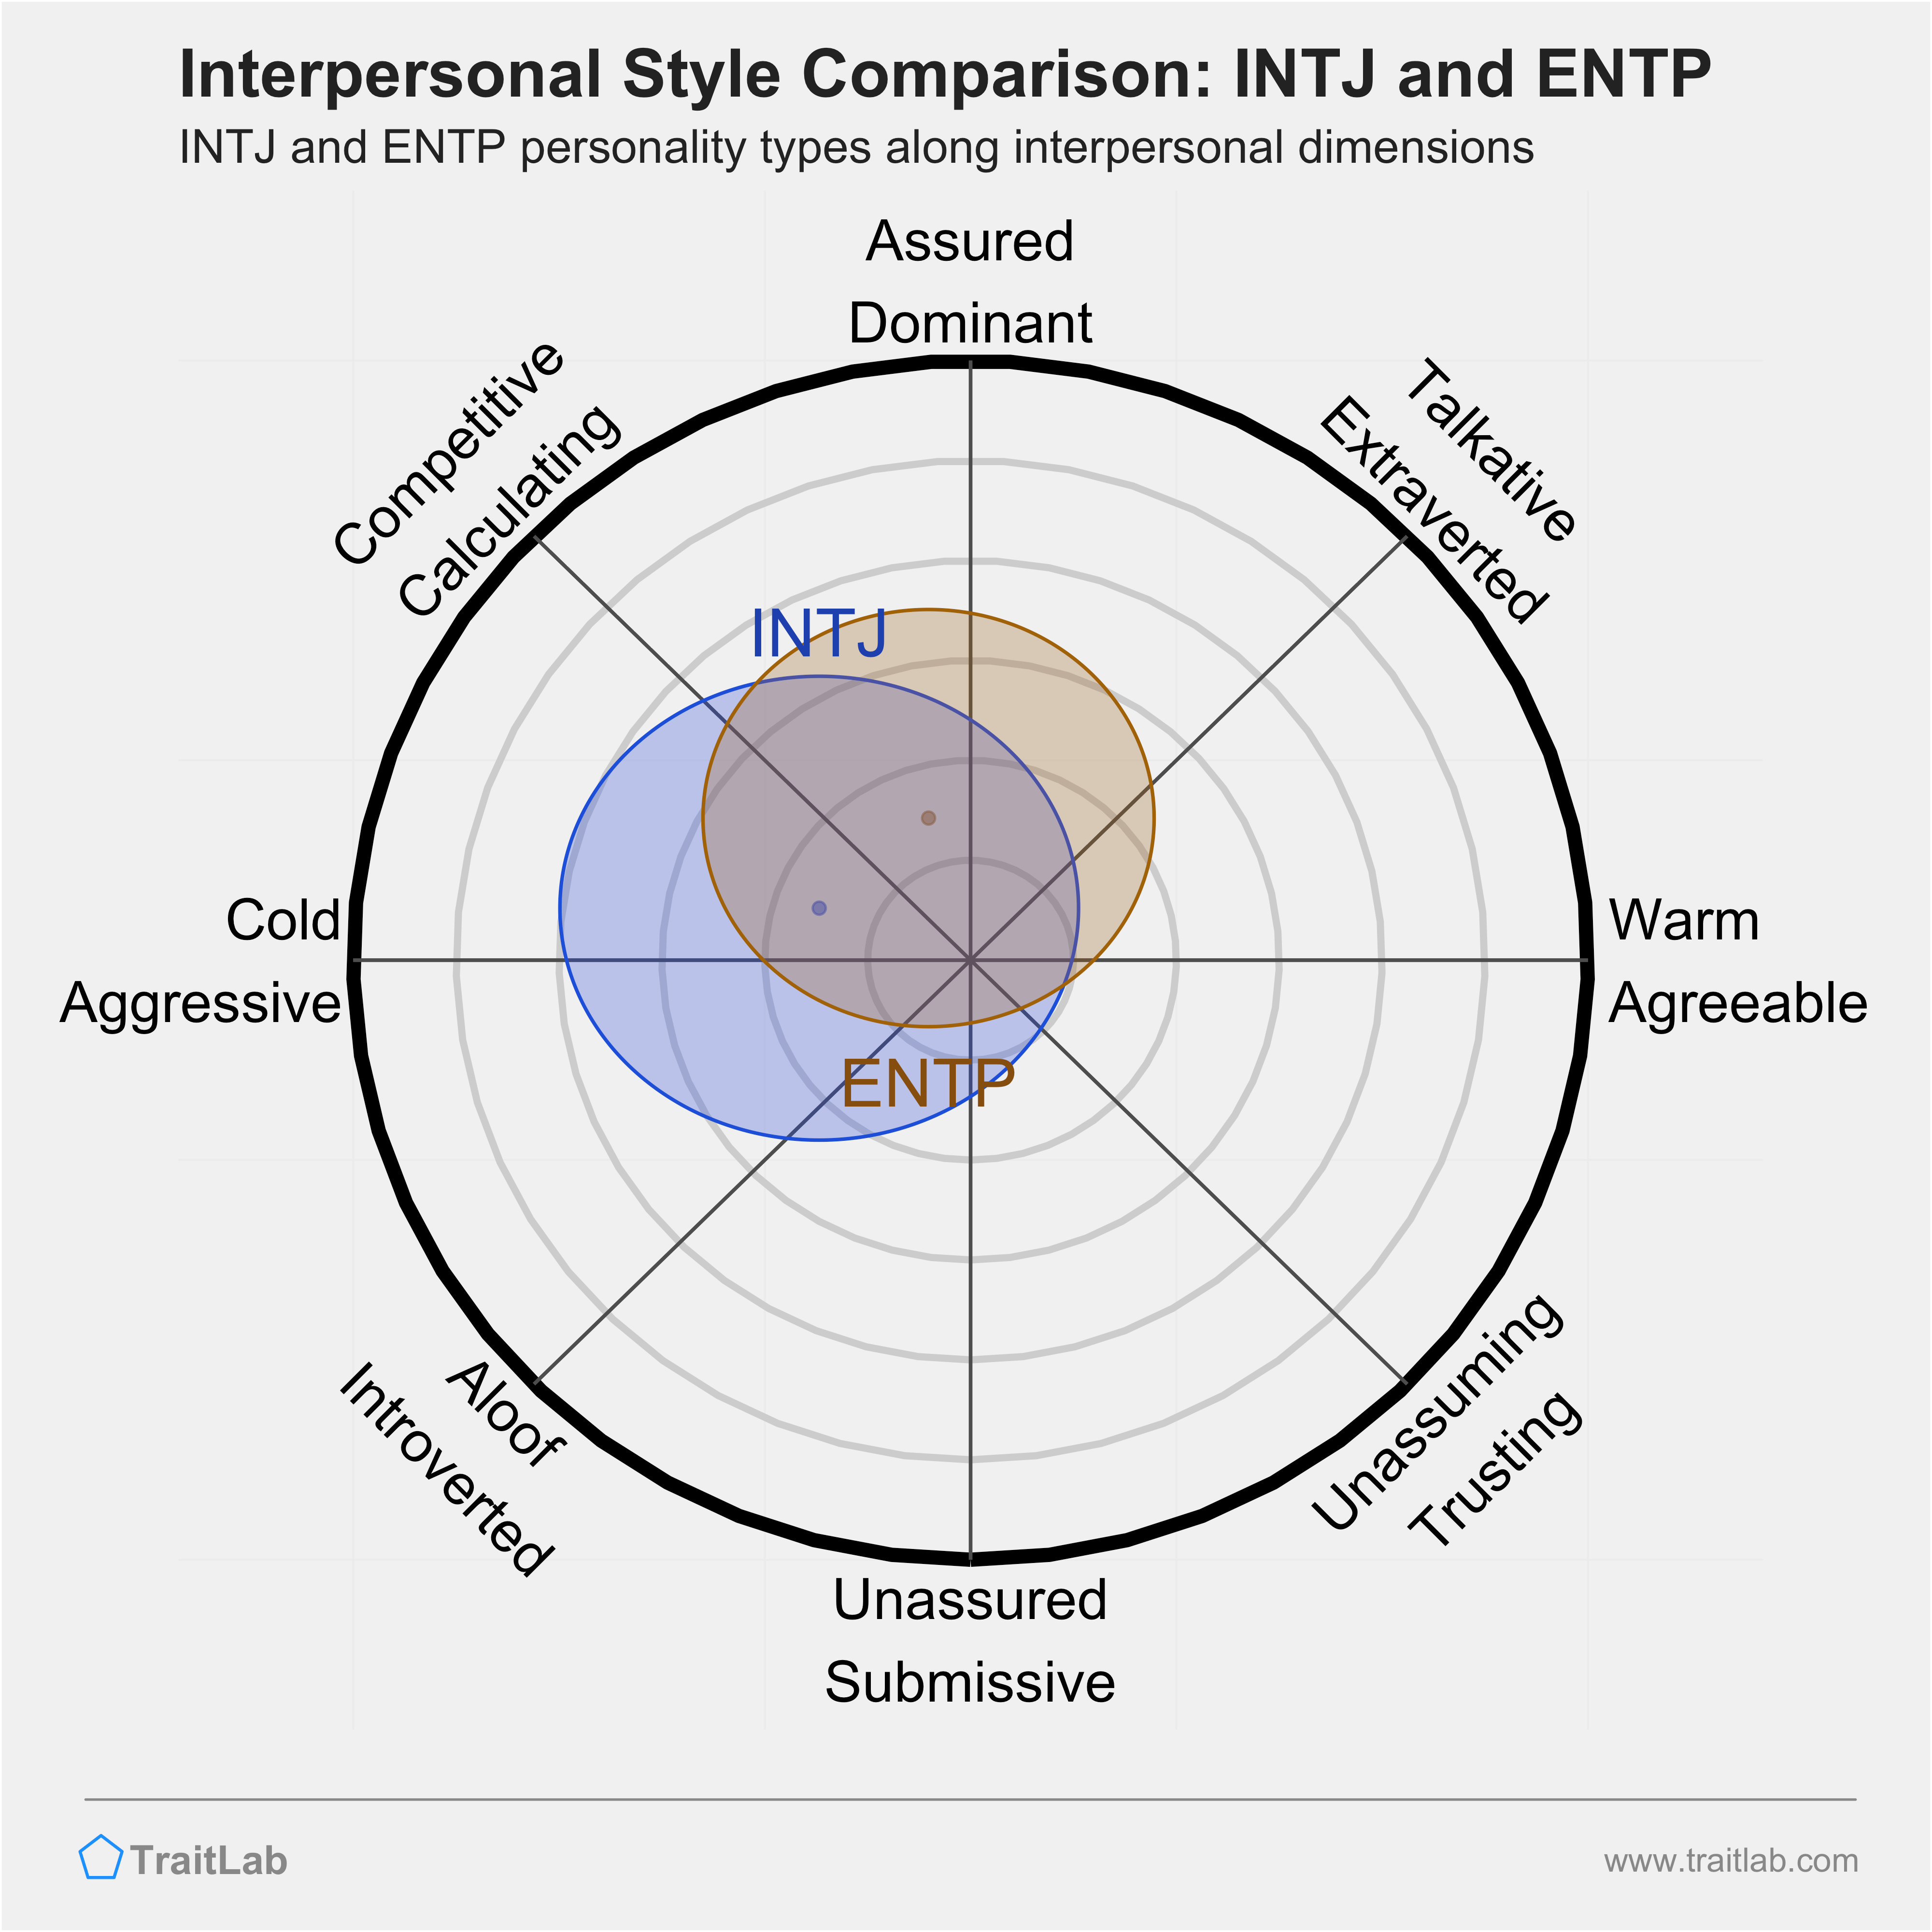 INTJ and ENTP comparison across interpersonal dimensions